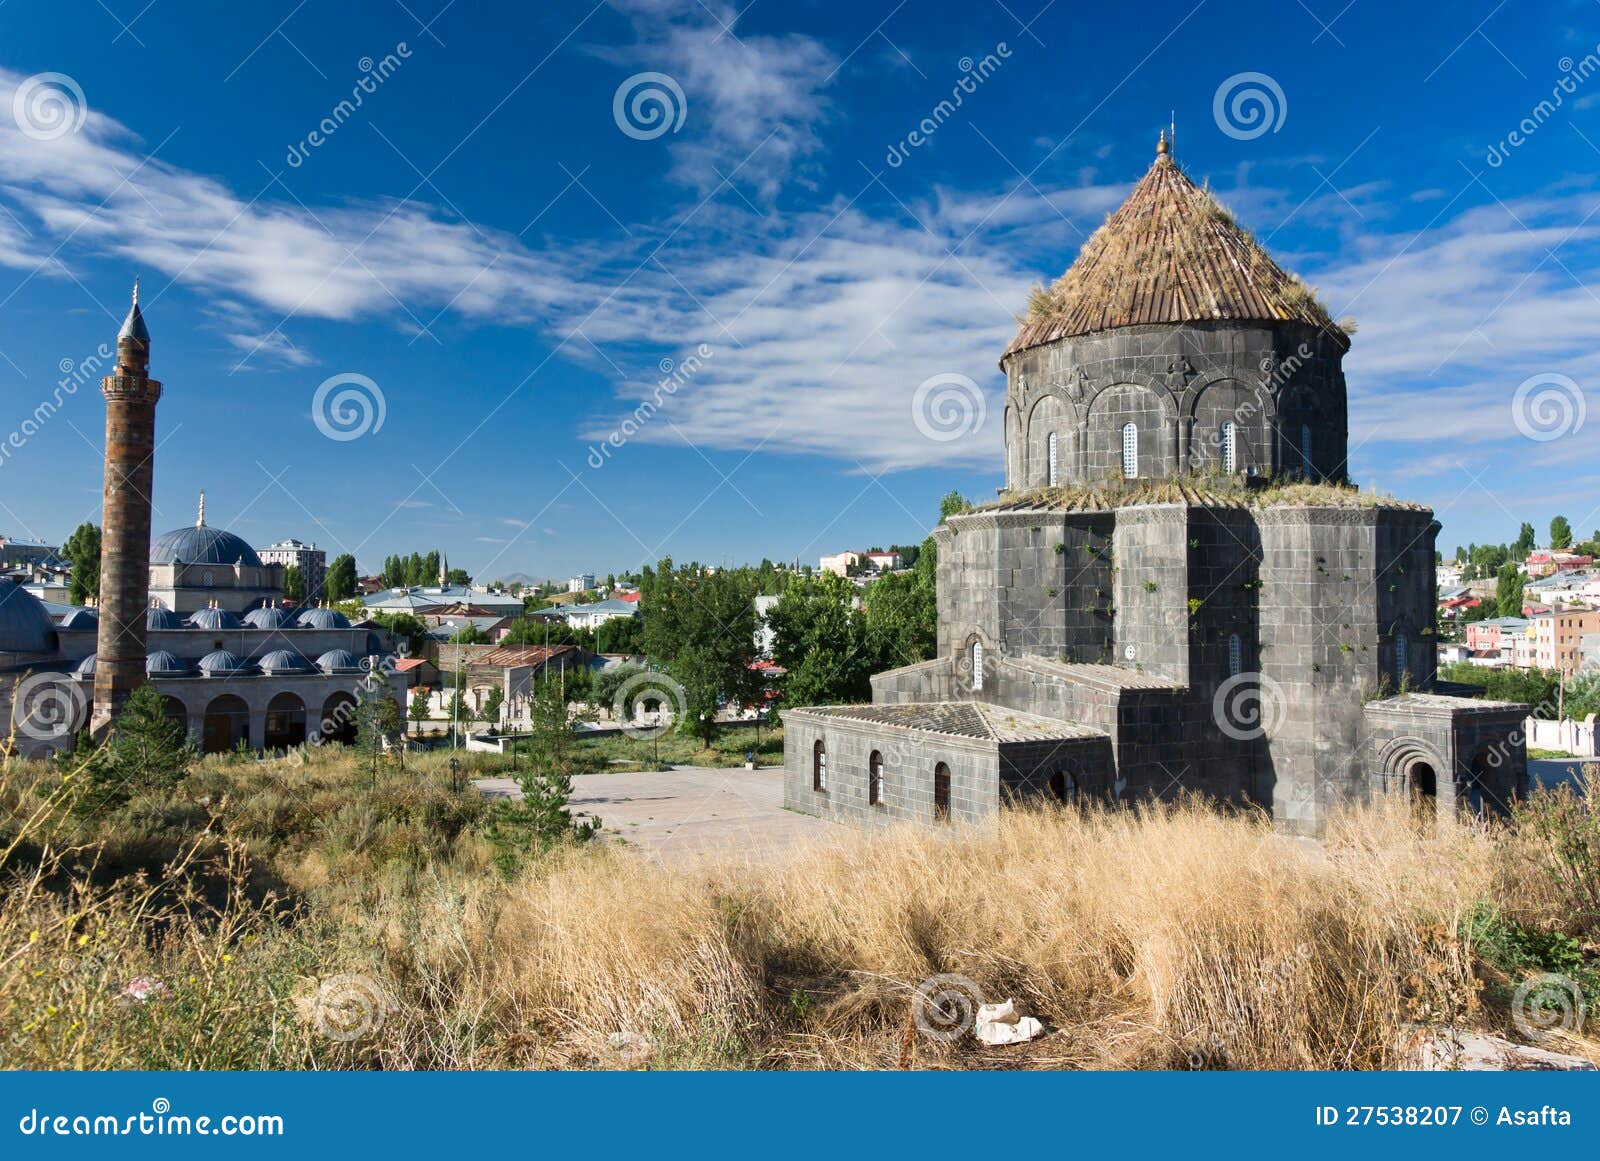 armenian church